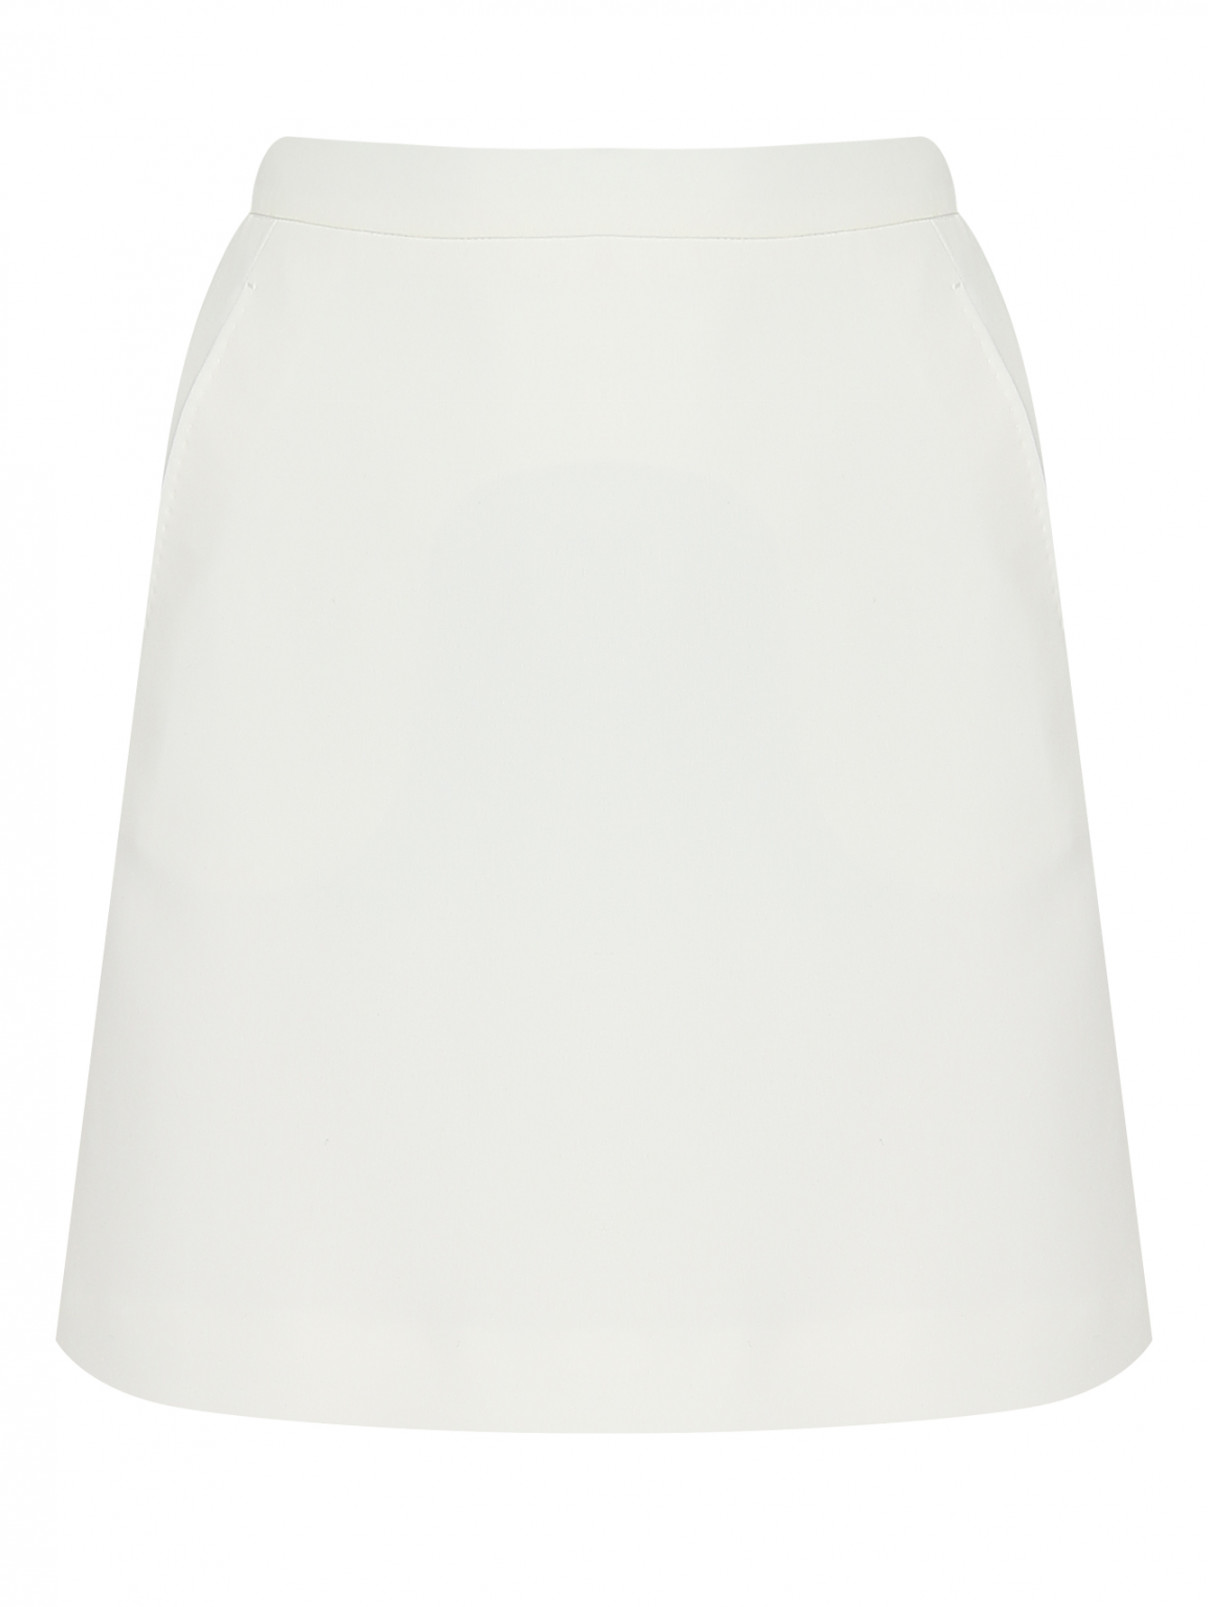 Юбка-мини с карманами Max Mara  –  Общий вид  – Цвет:  Белый